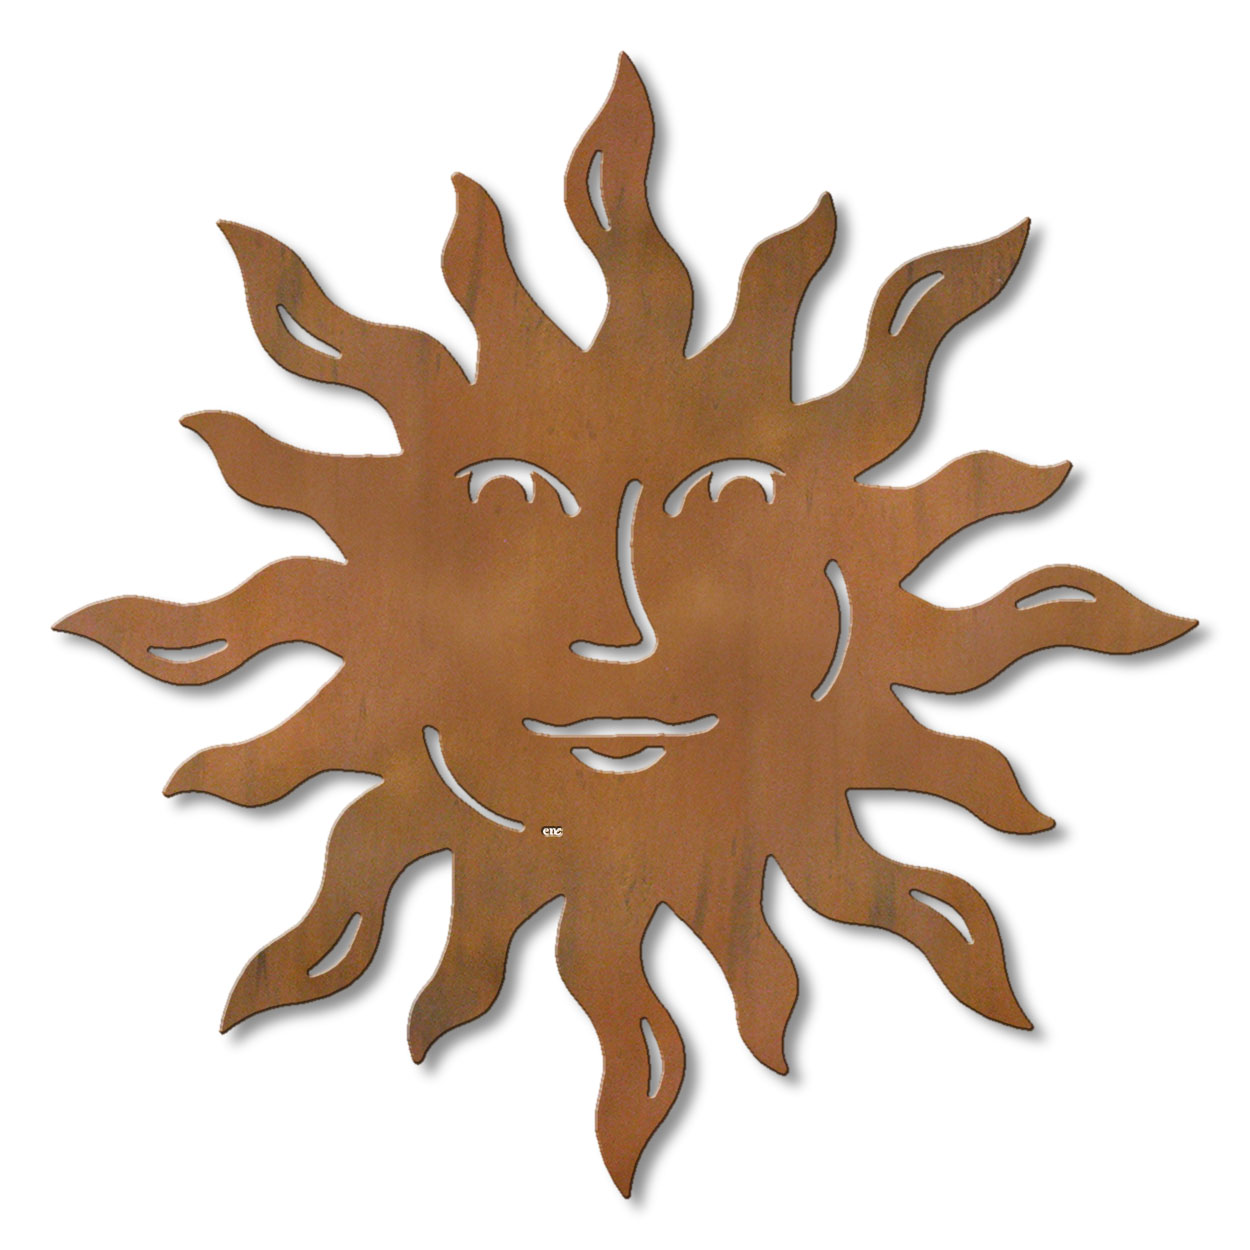 625015r - 18 or 24in Metal Wall Art - Happy Sun Face - Rust Patina